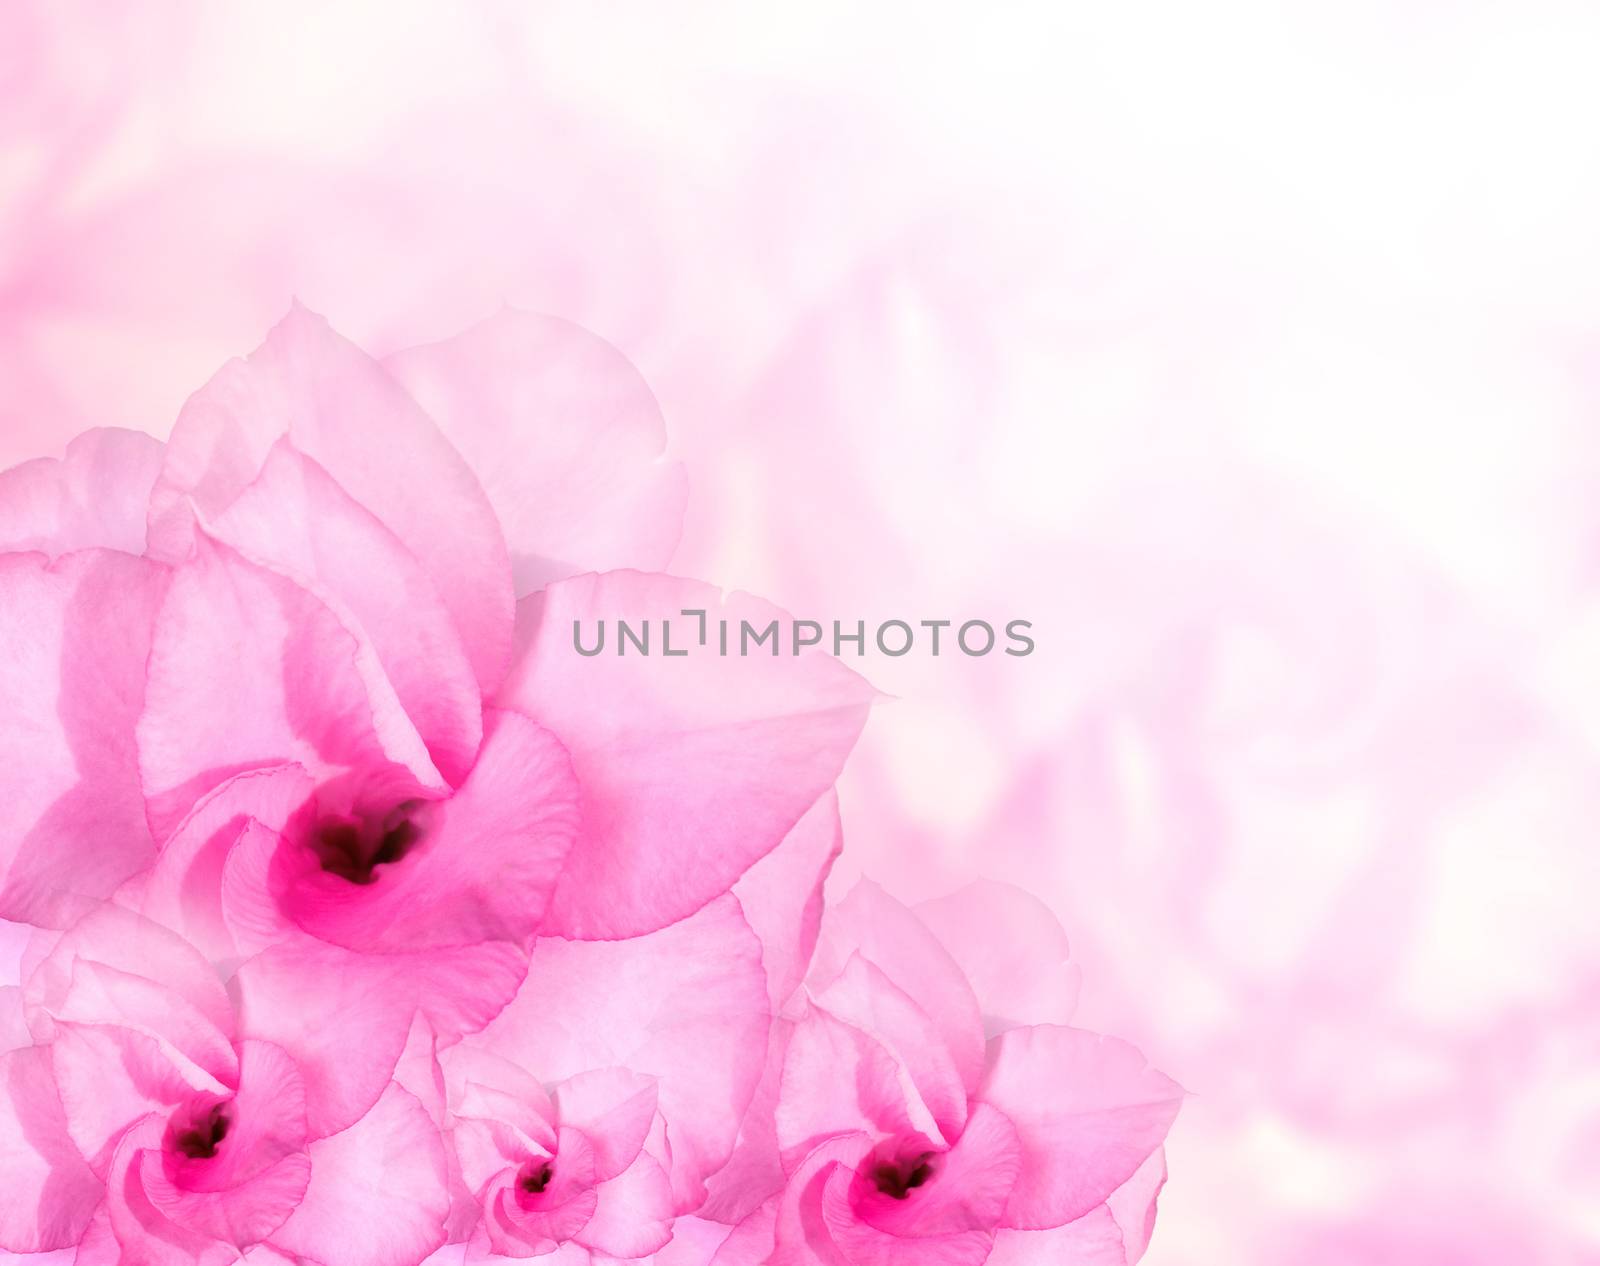 Flower background. Pink azalea flowers to create a beautiful